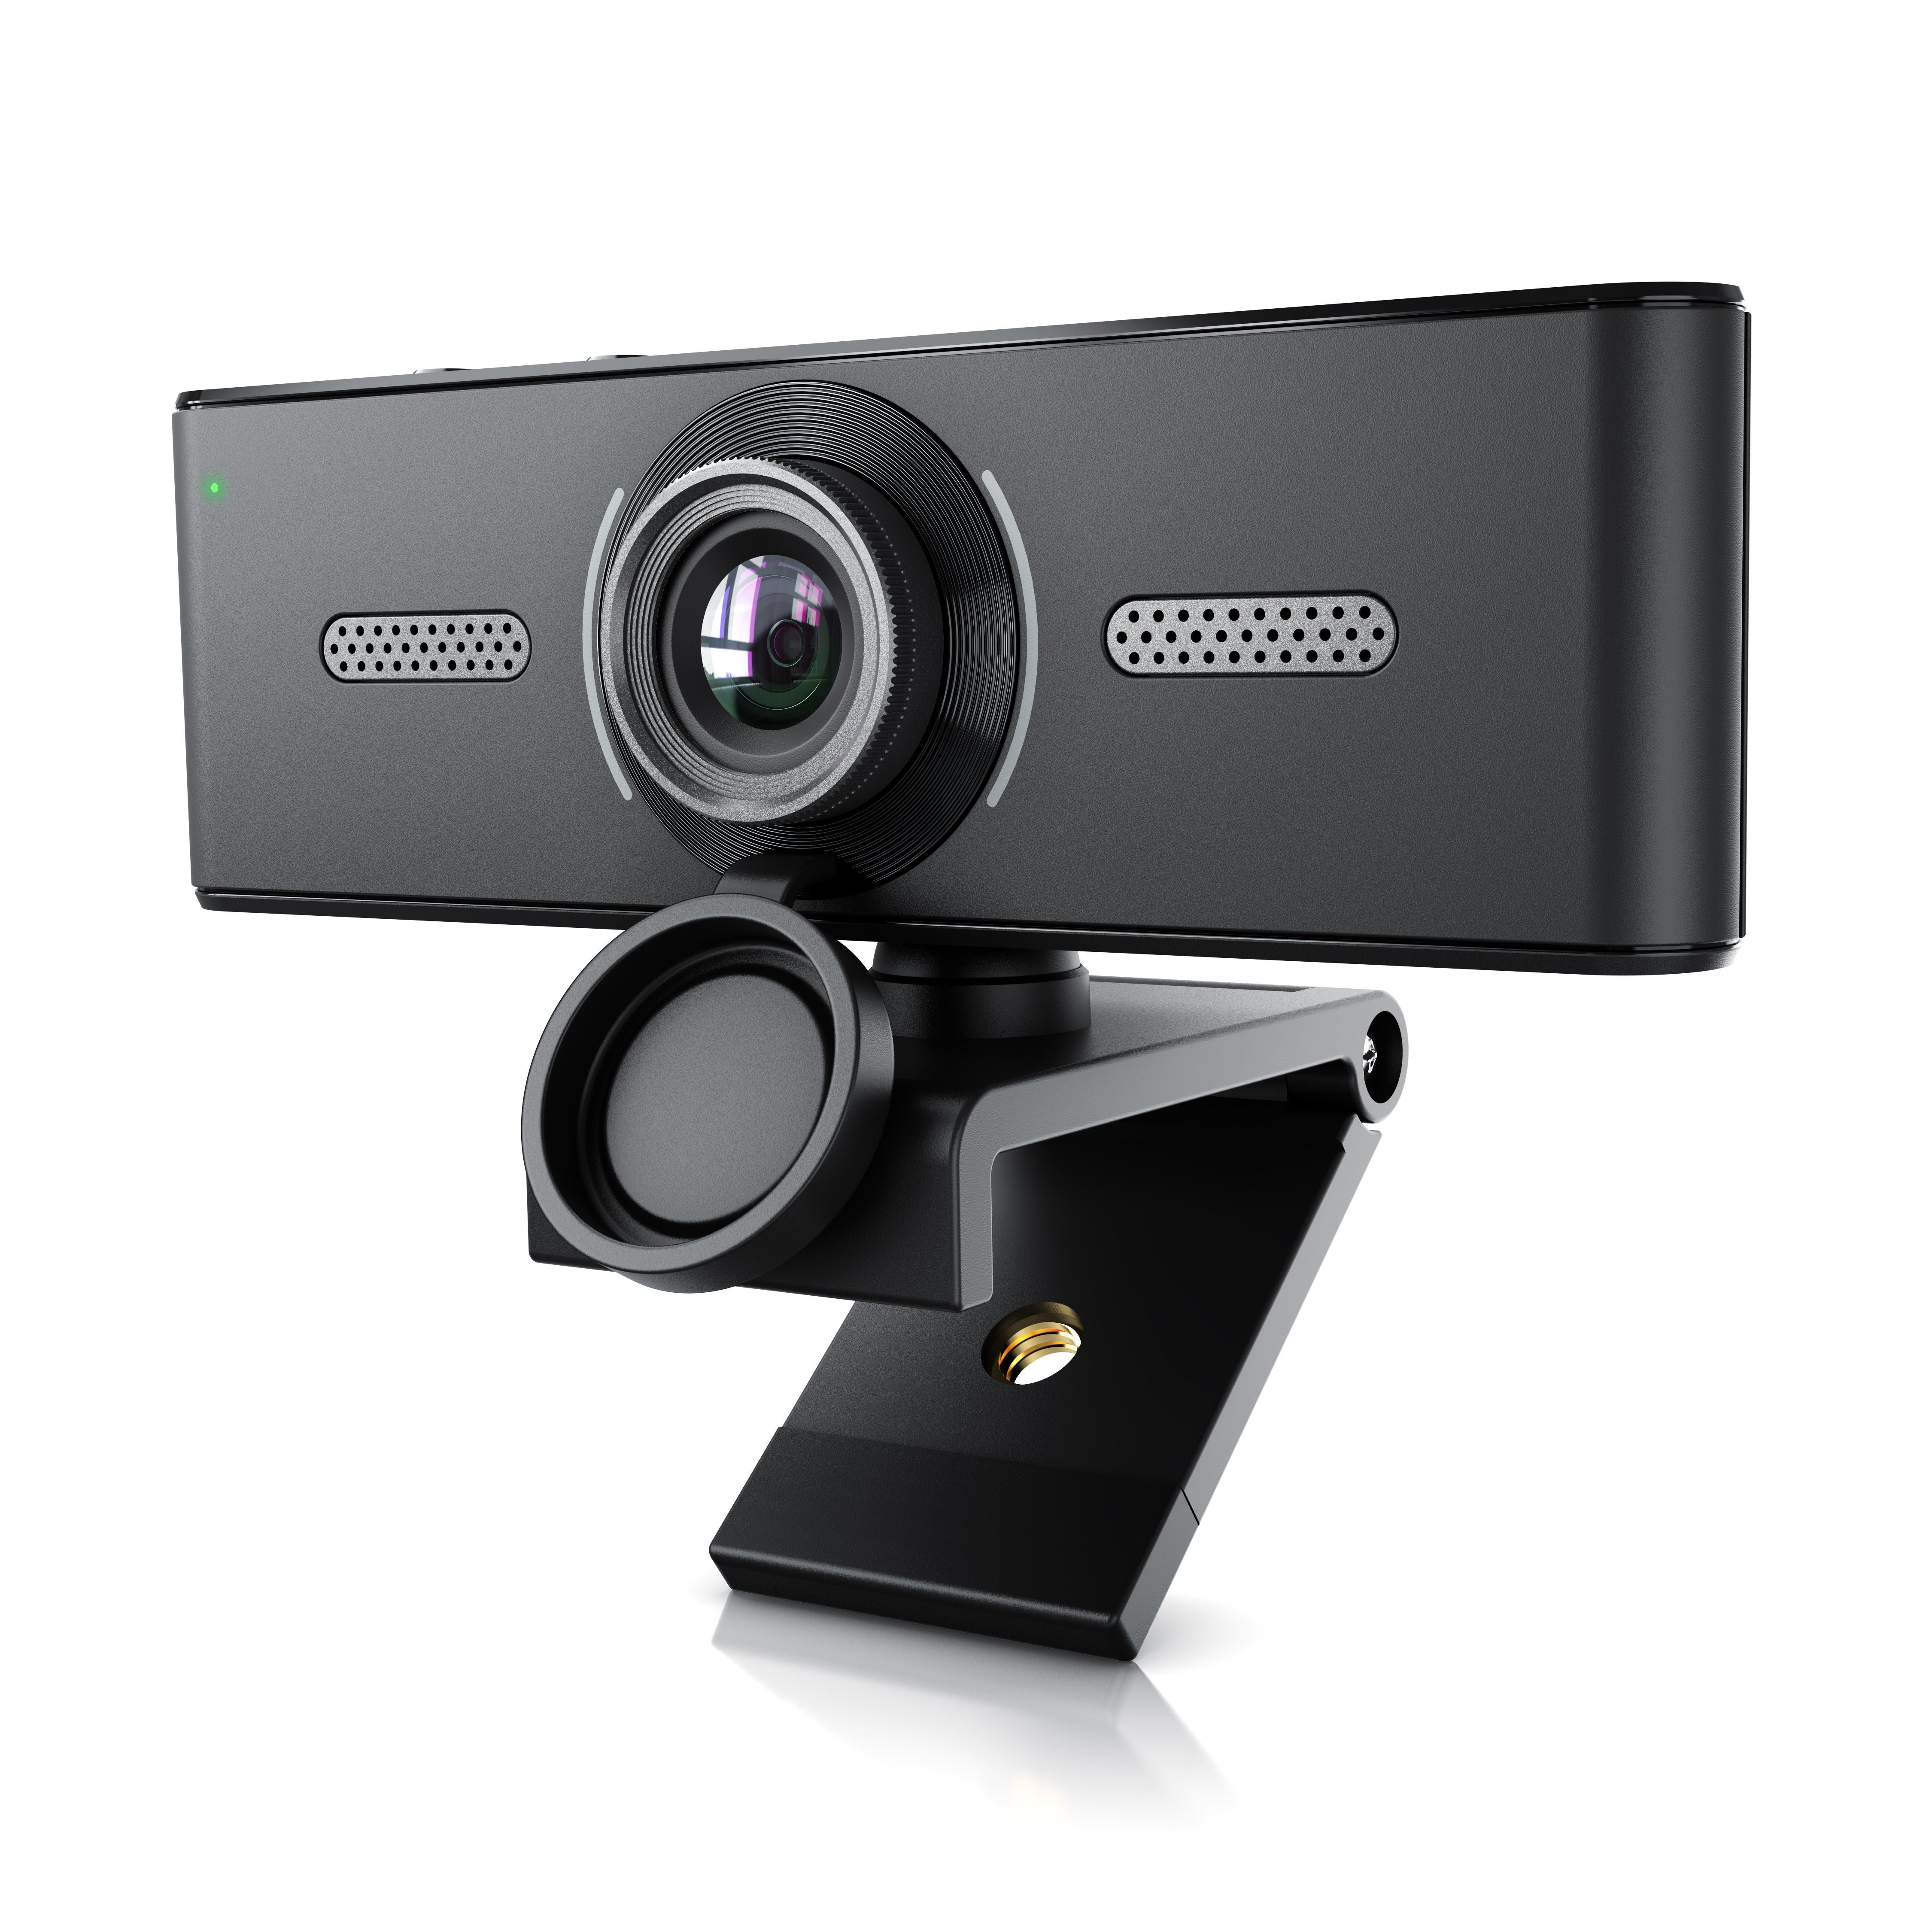 Aplic Full Mikrofon, HD-Webcam Dual @ 60 Fokus, Stativgewinde) Hz, manueller Hz, @ FHD 30 (2K